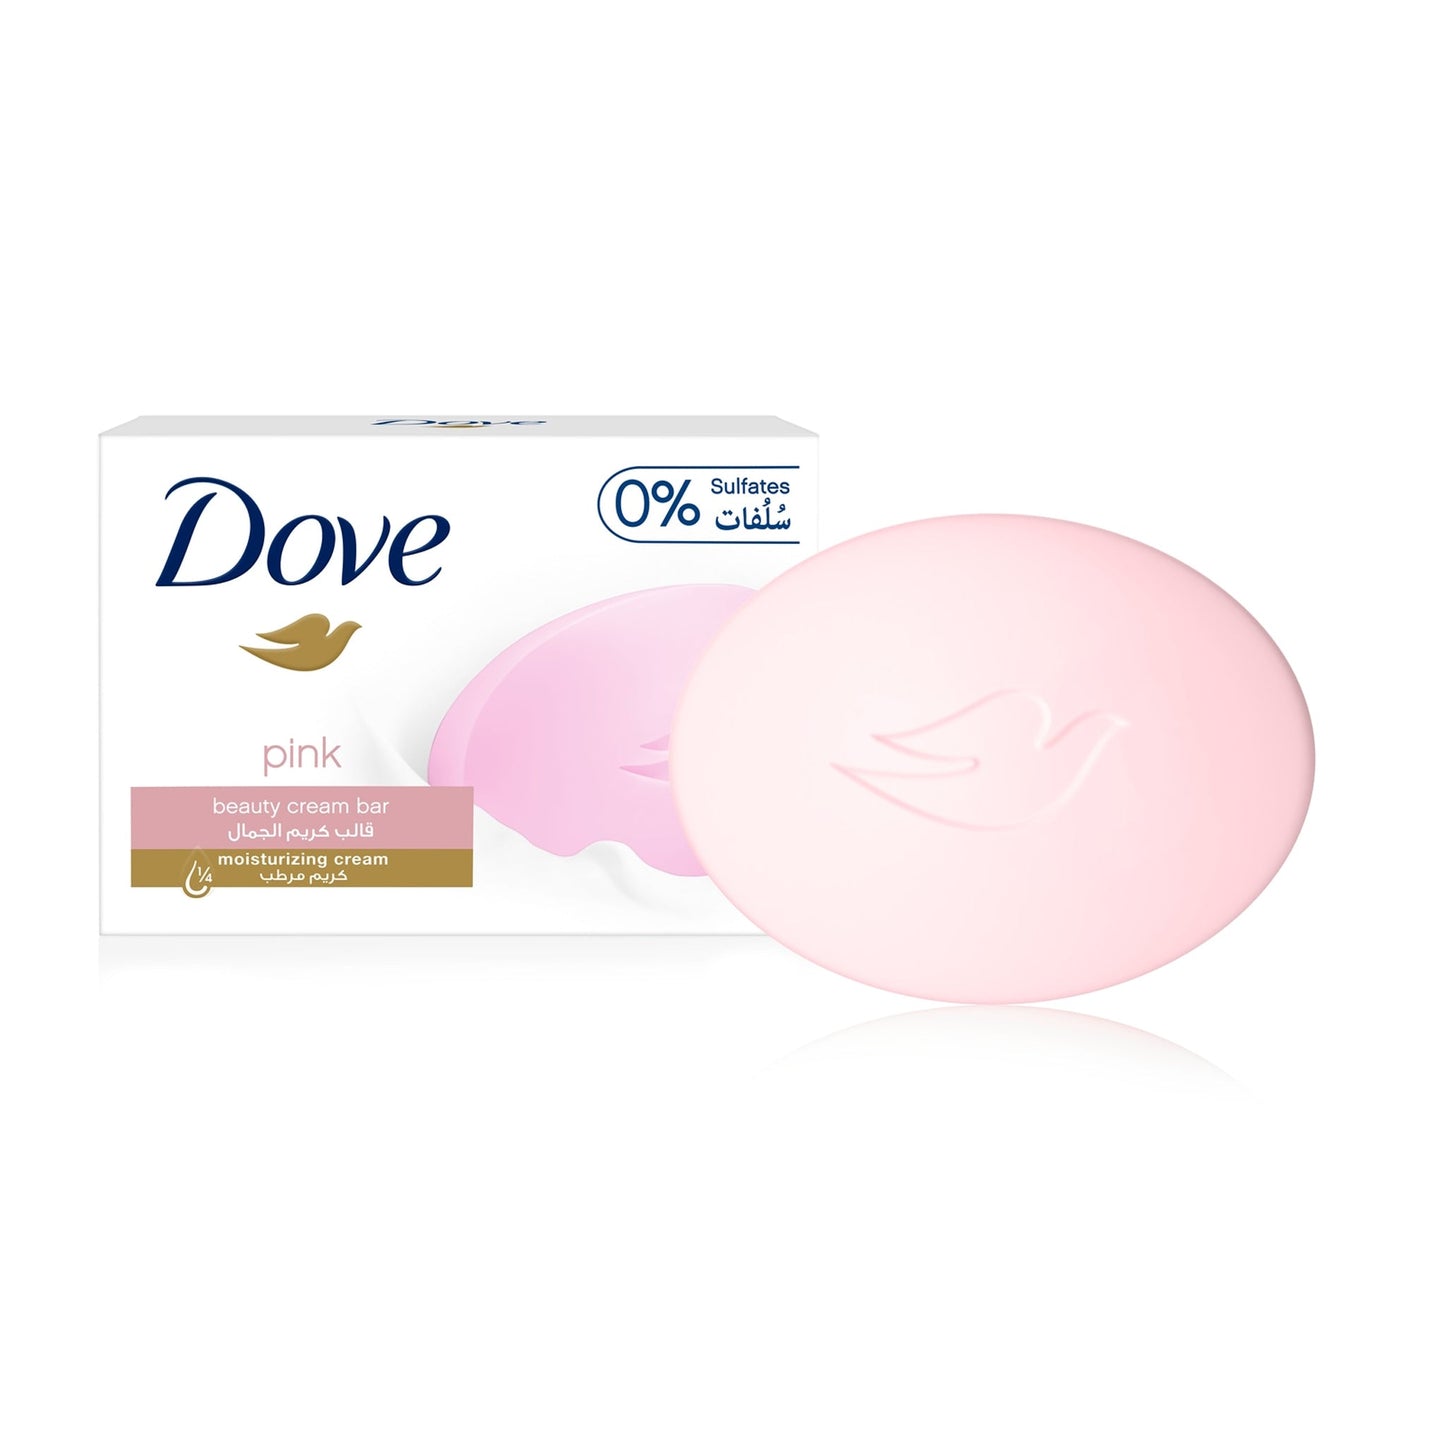 Dove - Pink Beauty Cream Bar - 100g